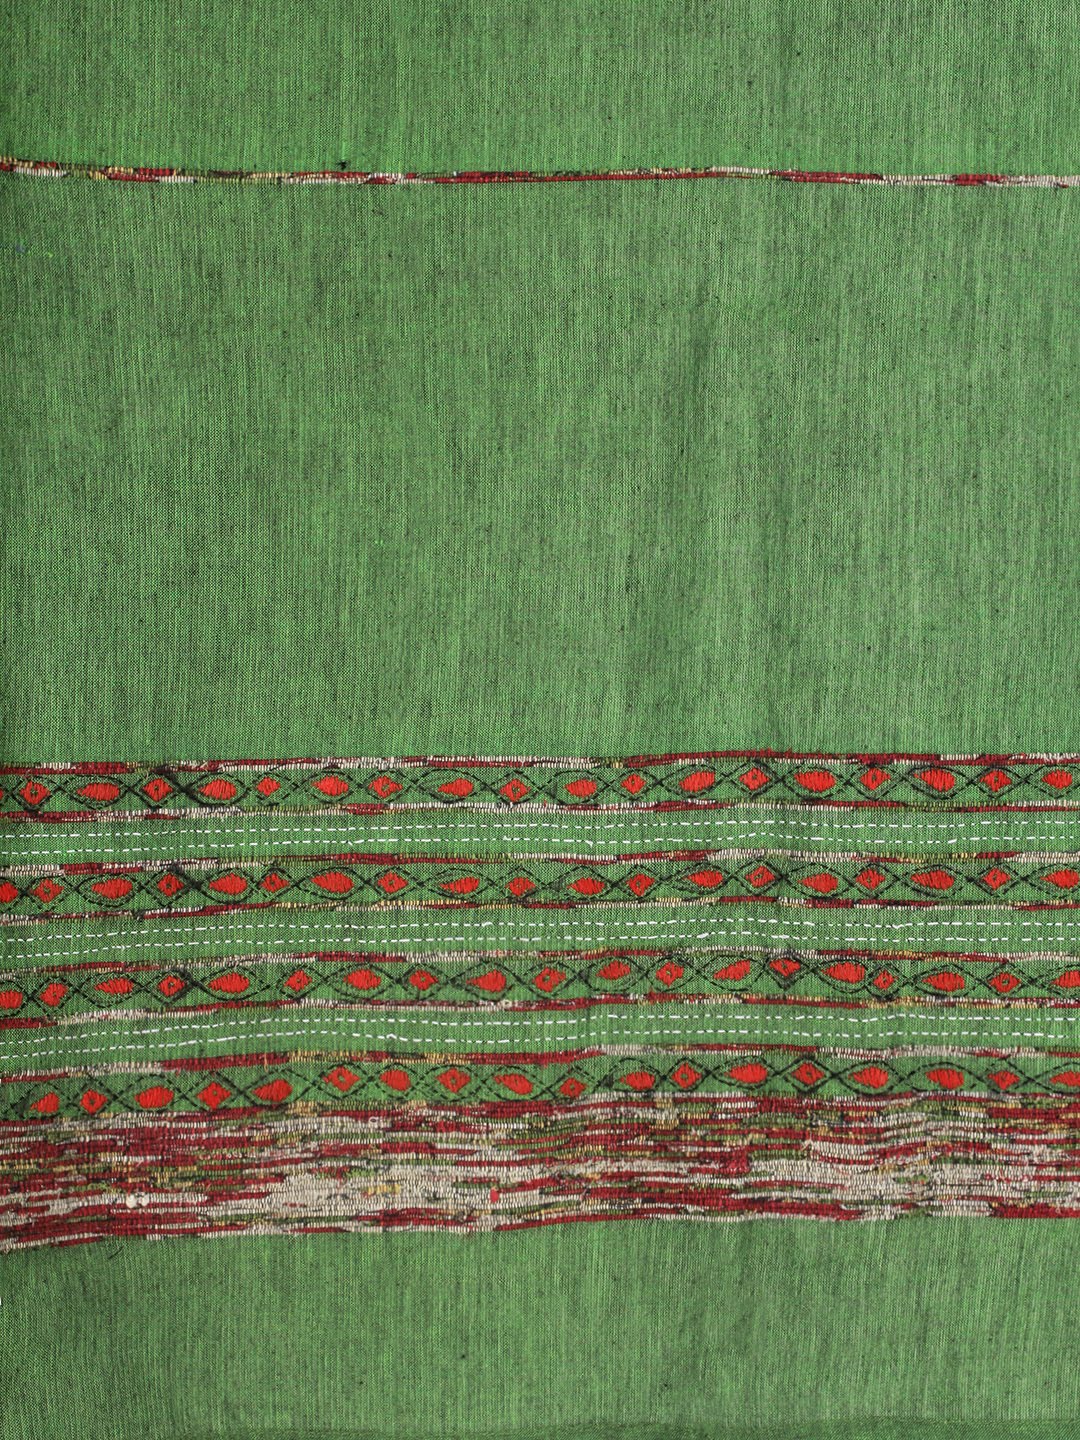 Handloom Cotton Khesh Pickle Green Rod Pocket Window Curtain - Arteastri